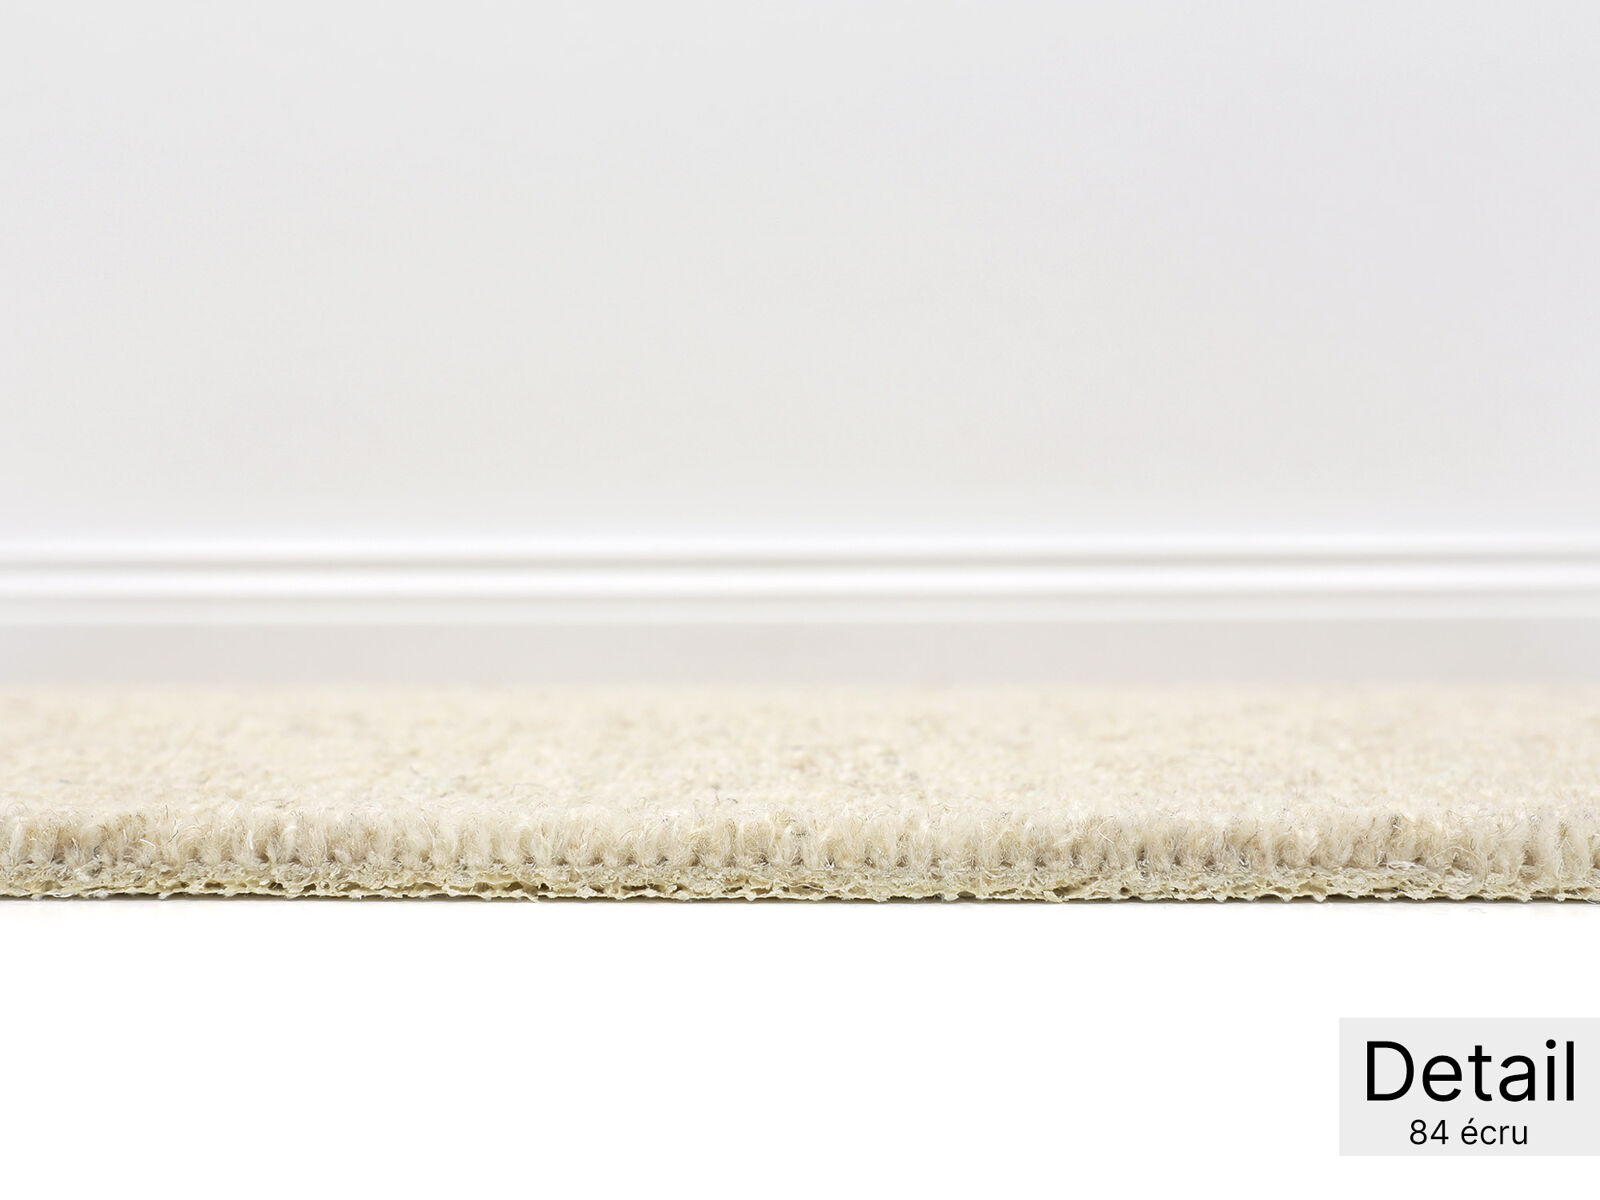 Tiara Djerba Teppichboden | 100% Wolle | 420cm Breite & Raummaß